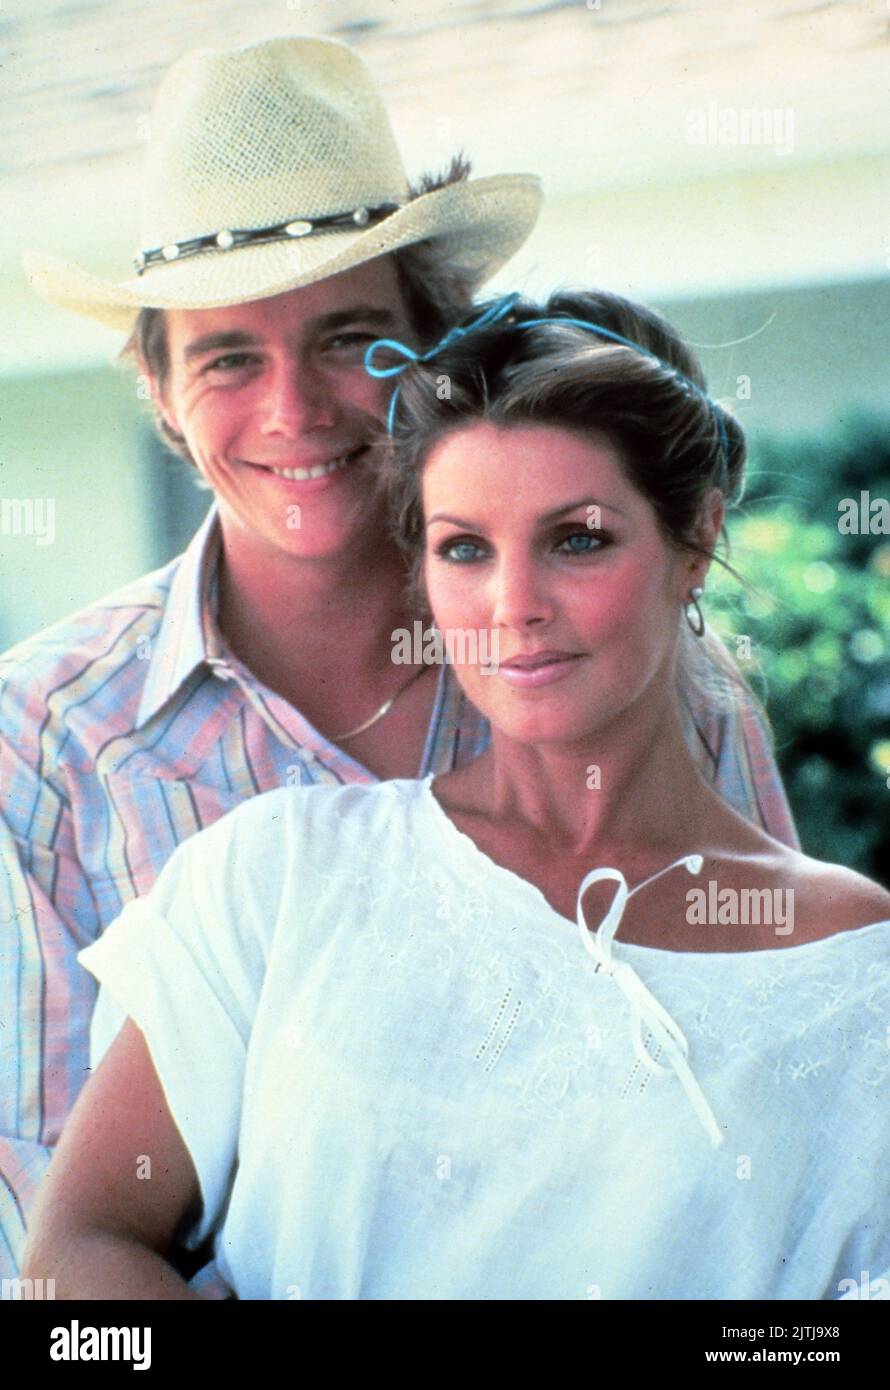 Dallas, Fernsehserie, USA 1978 - 1991, Darsteller: Priscilla Beaulieu Presley Foto Stock